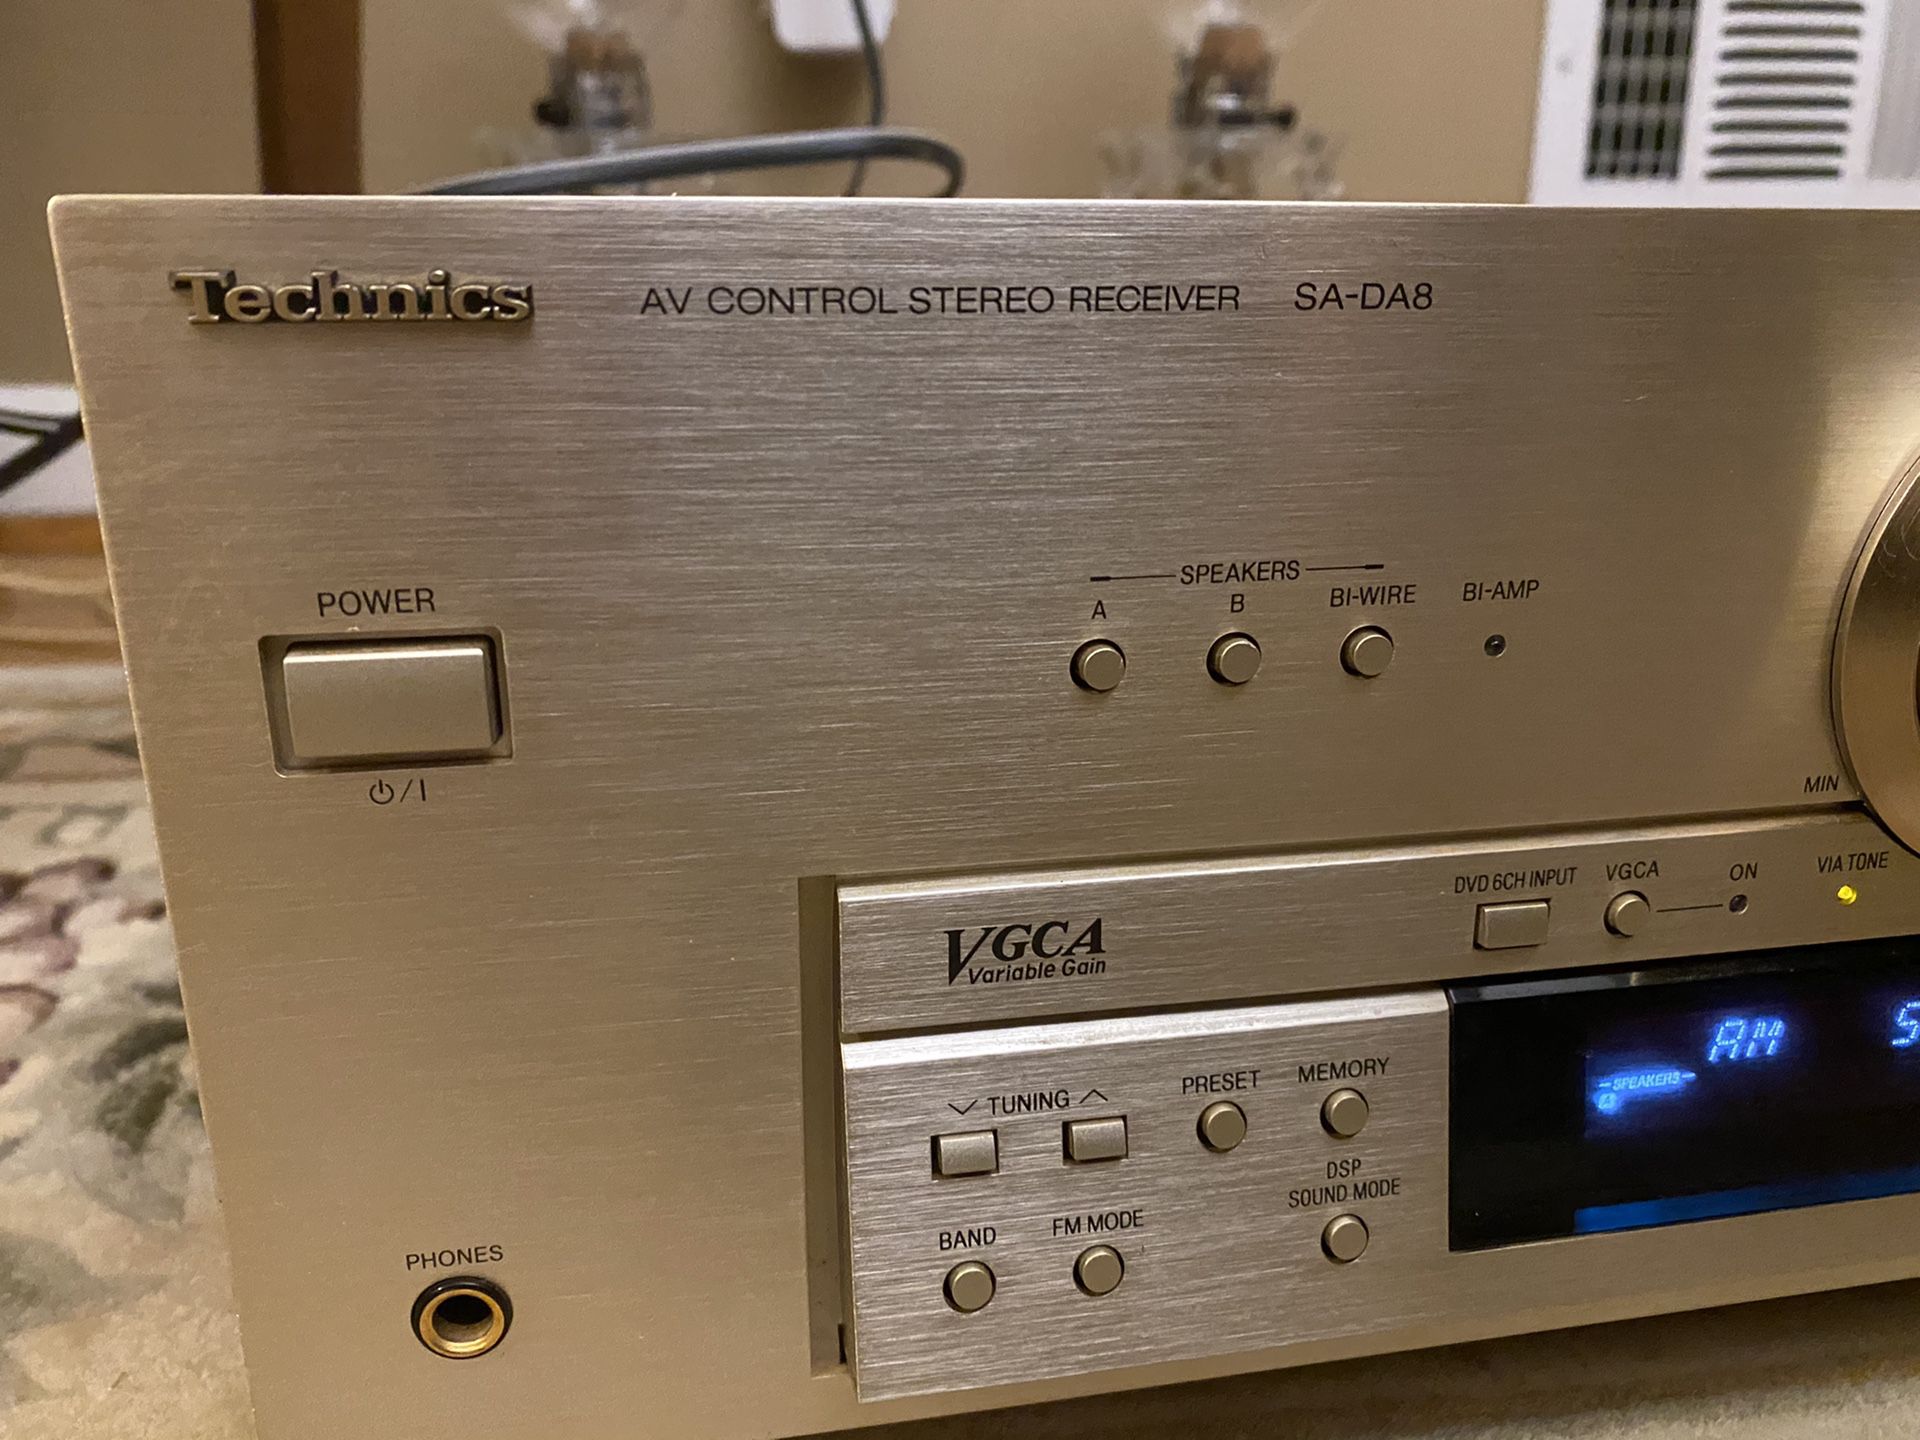 Technics SA-DA8 working stereo receiver